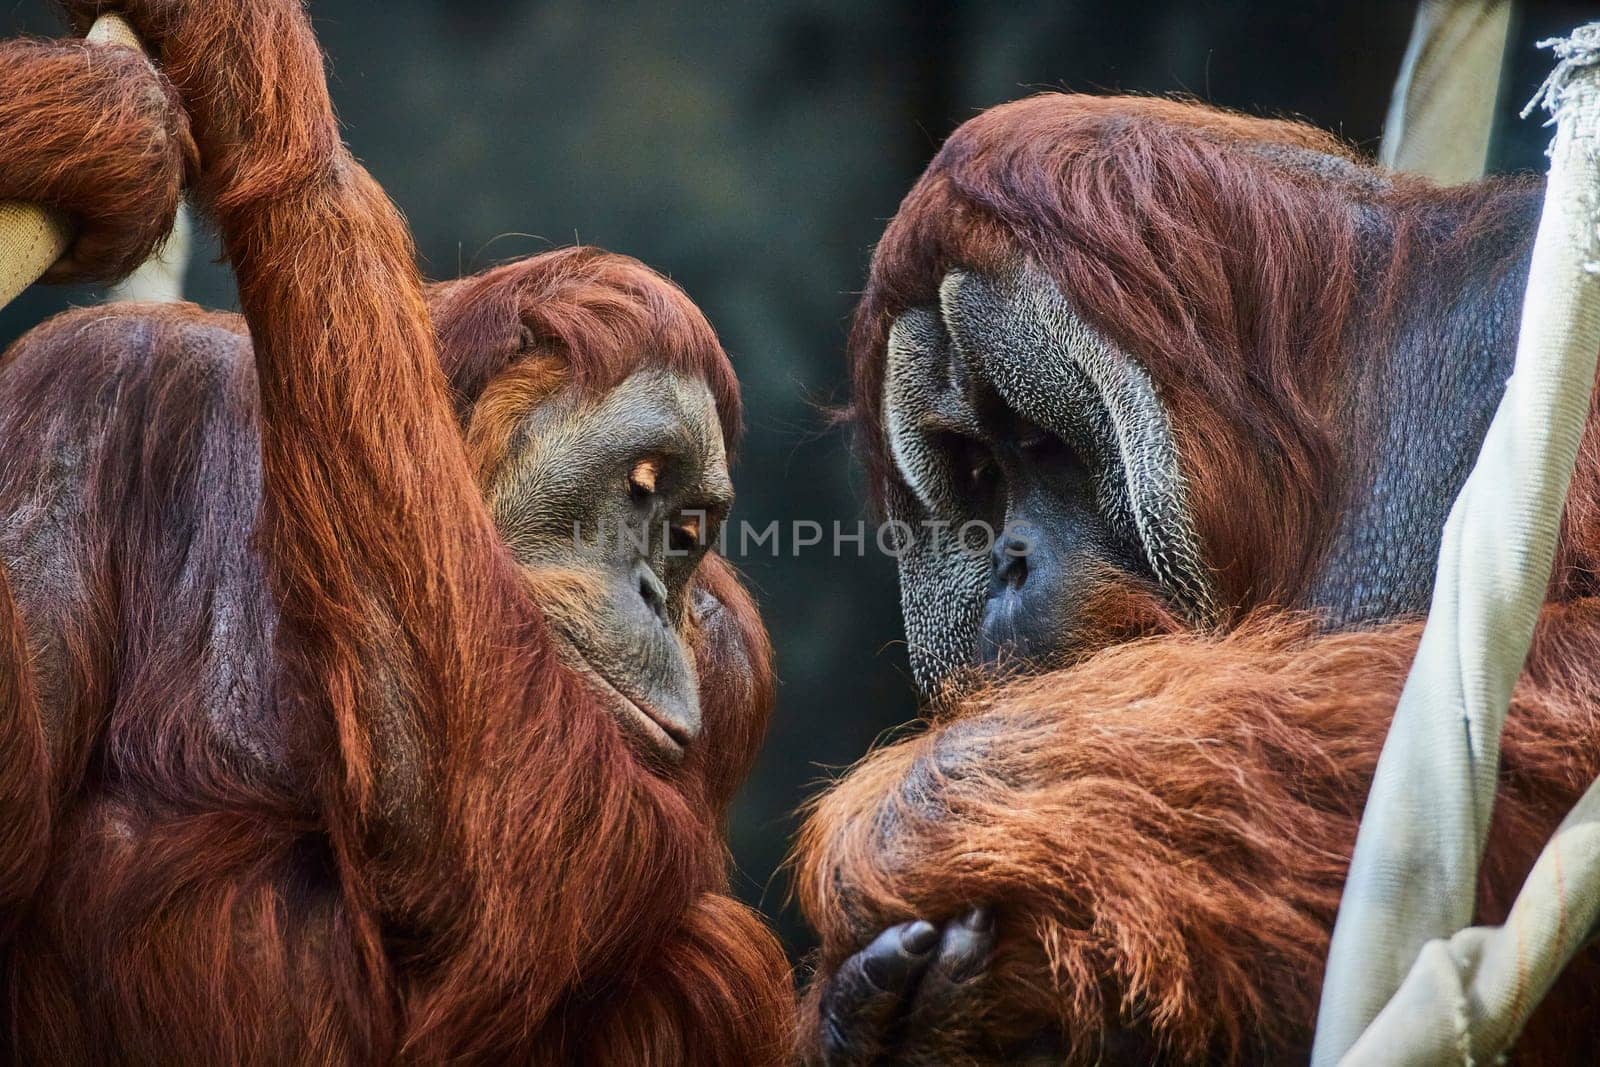 Tender moment between two Sumatran orangutans at Fort Wayne Children's Zoo, Indiana, showcasing wildlife conservation.